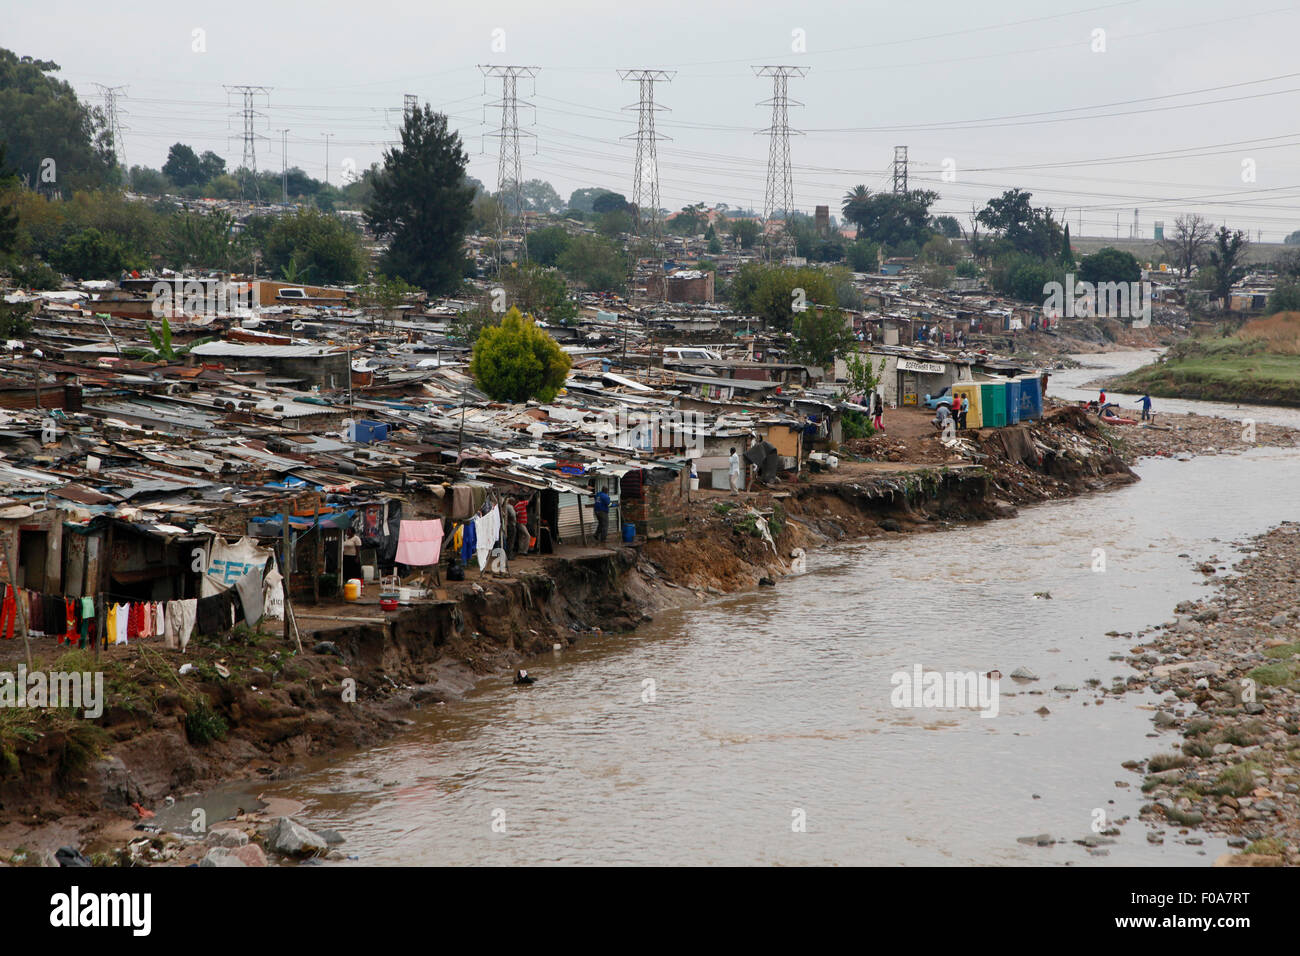 Hütten am Ufer des Flusses Jukskei am Morgen nach Starkregen Häuser überflutet. Alexandra Township. In Johannesburg. Süd-Afr Stockfoto